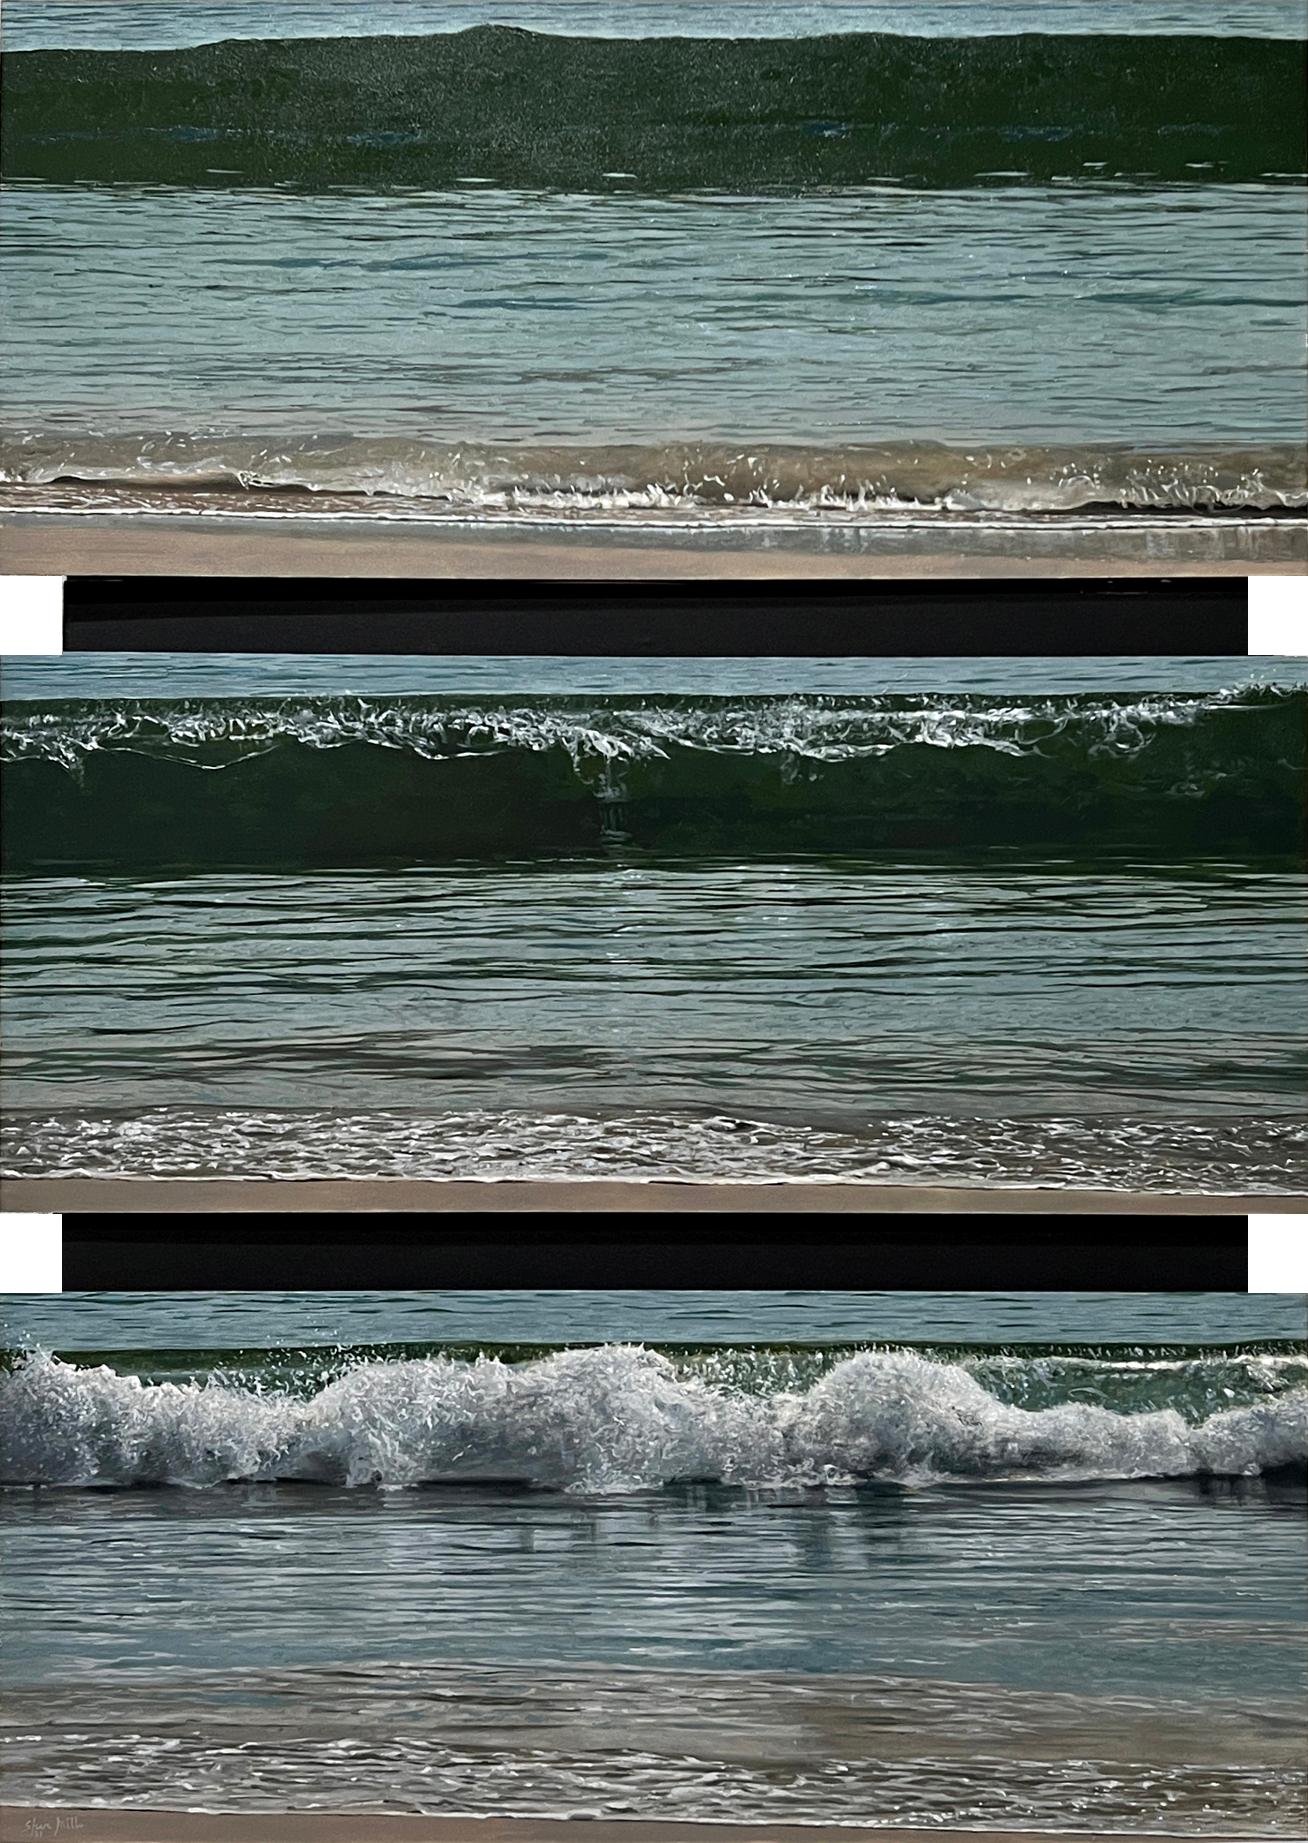 Steve Mills Landscape Painting - OCEAN SWELL - Seascape / Multi-Panel / Crashing Waves / Photorealism